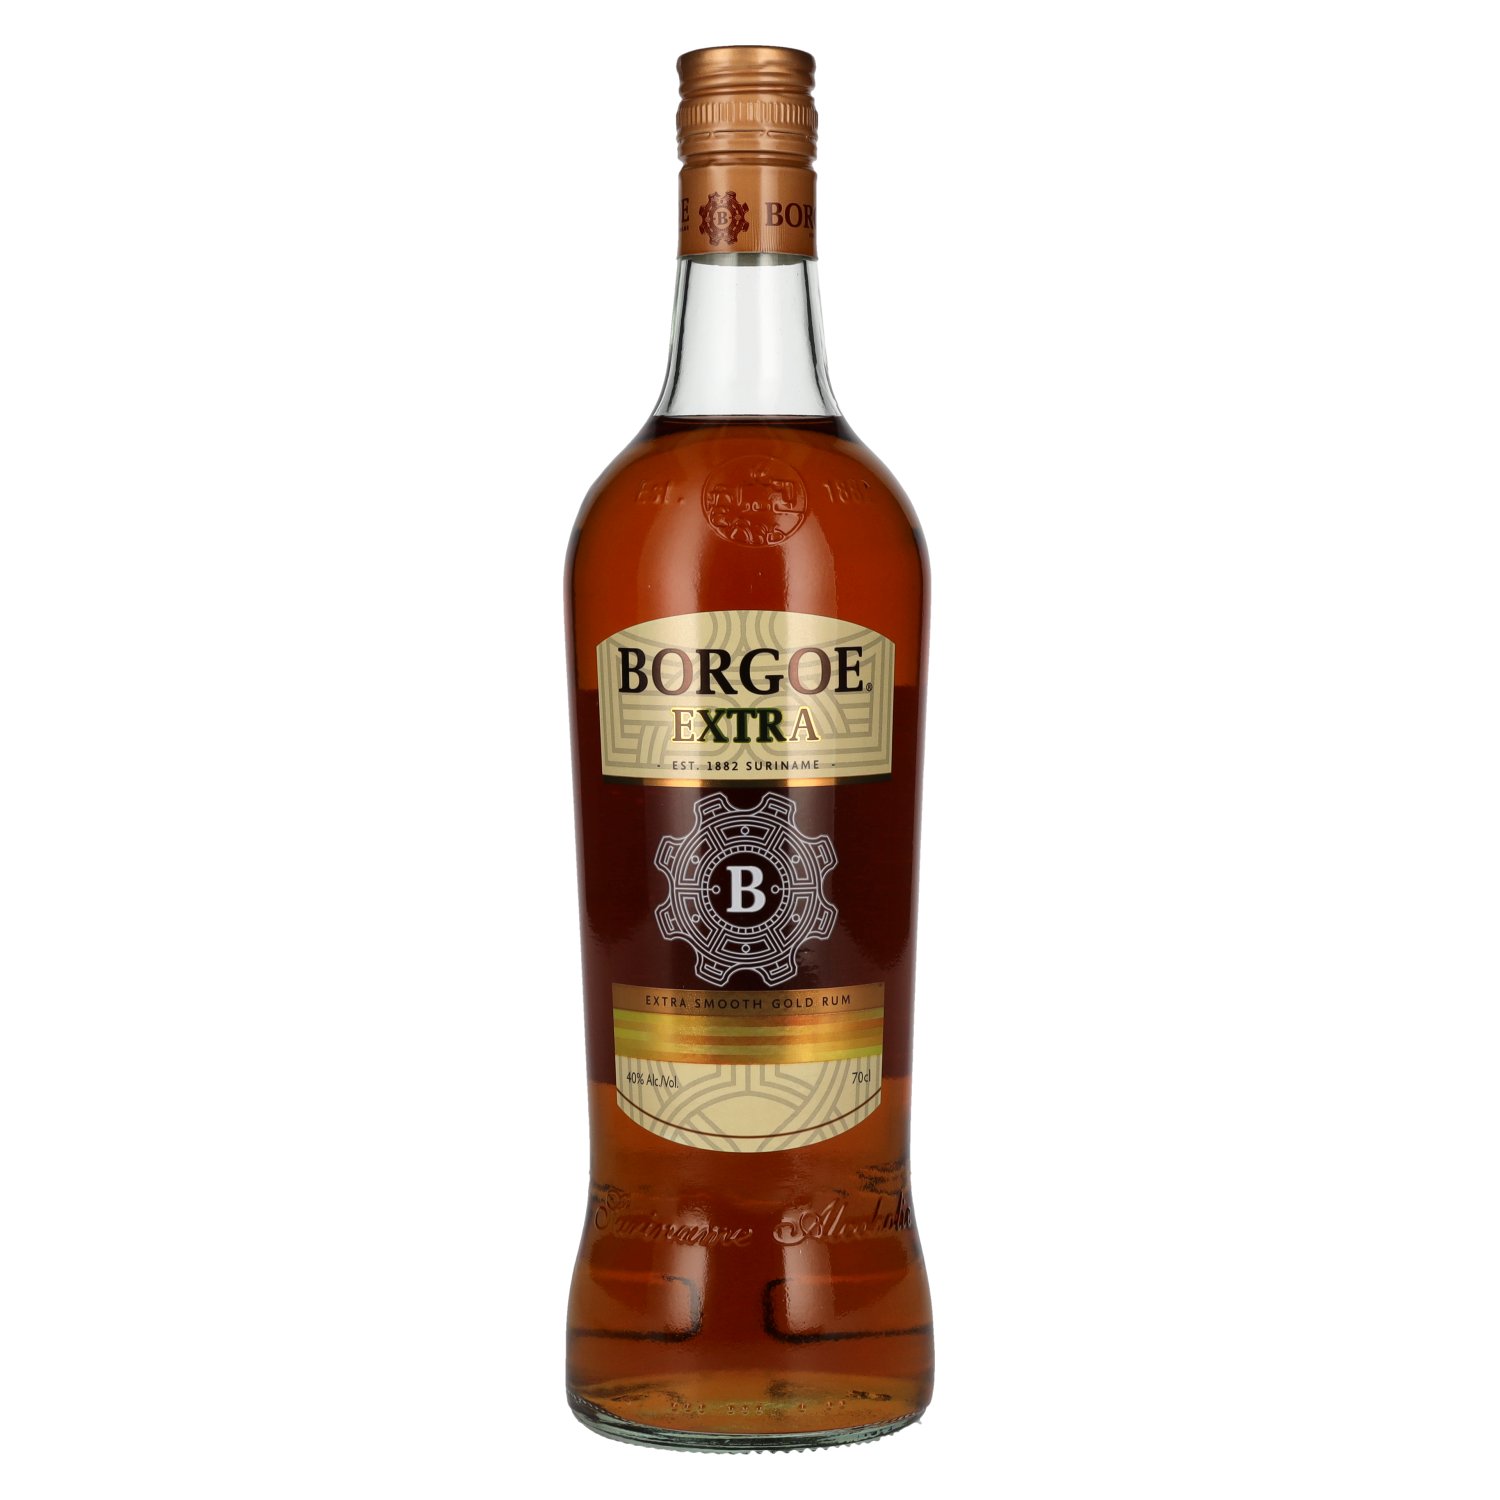 Borgoe Extra Smooth Gold Rum 40% 0,7L